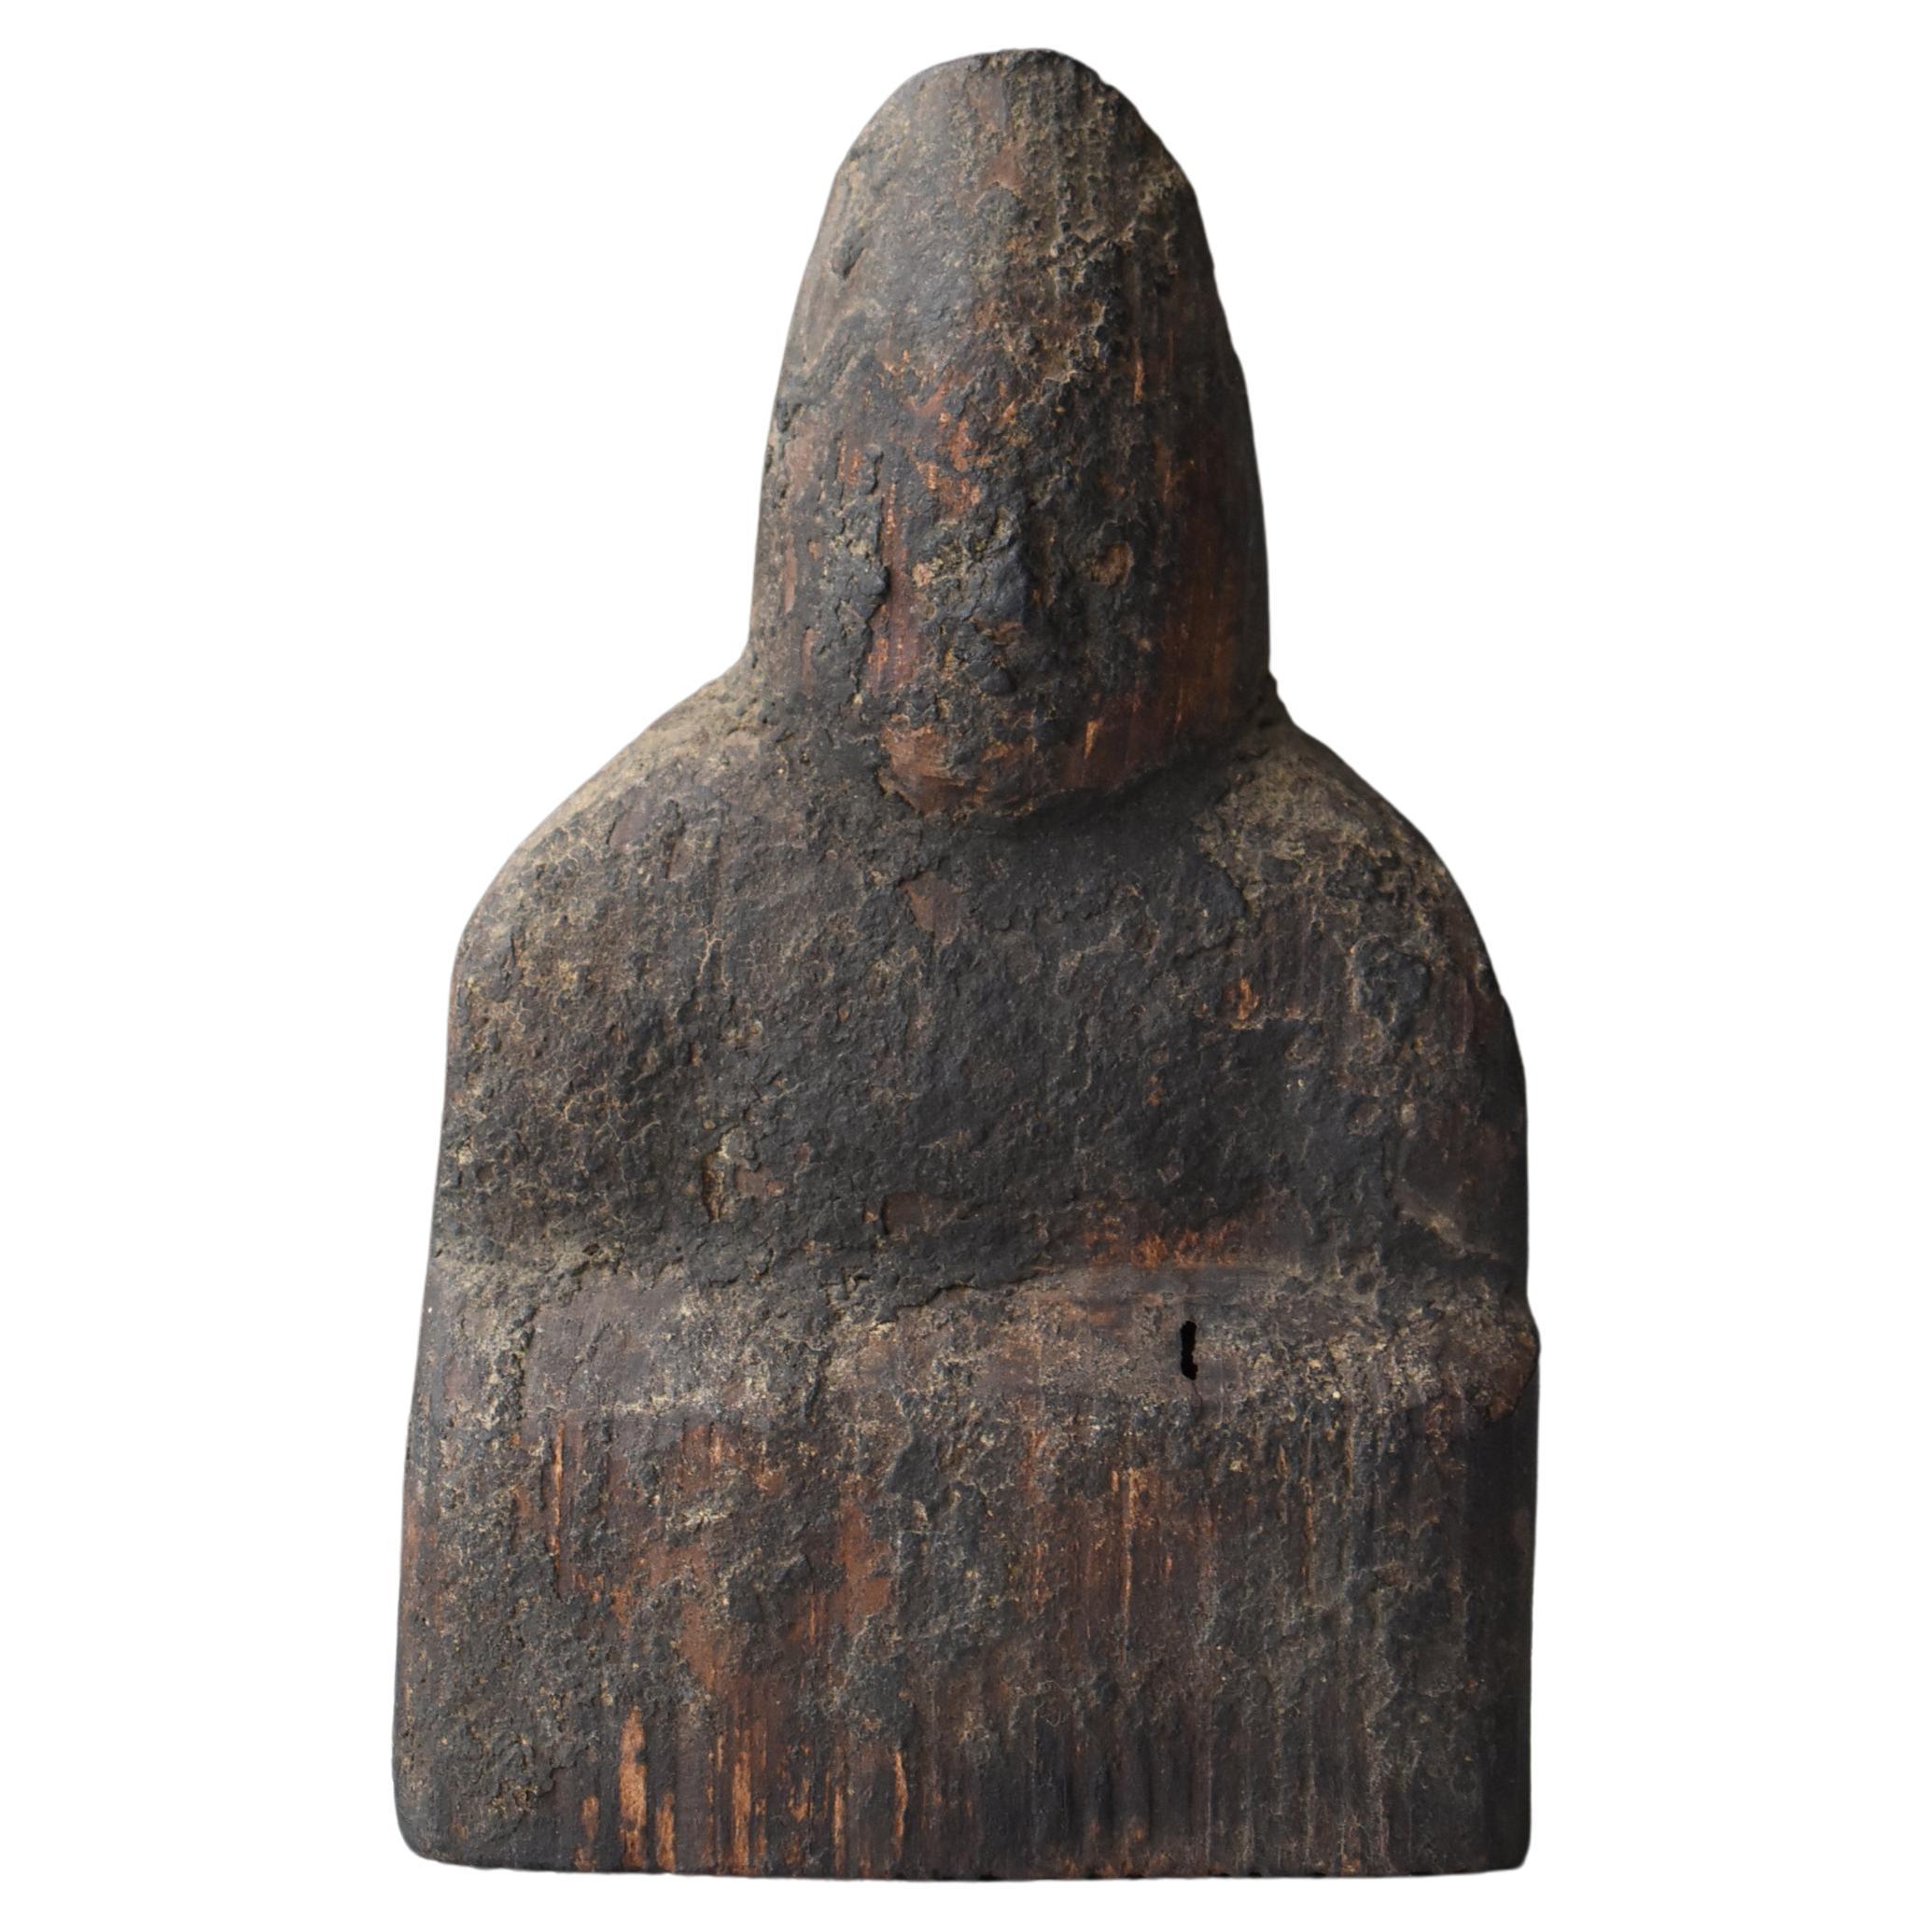 Japanese Antique Wood Carving Male God 1600s-1700s / Figurine Object Wabi Sabi